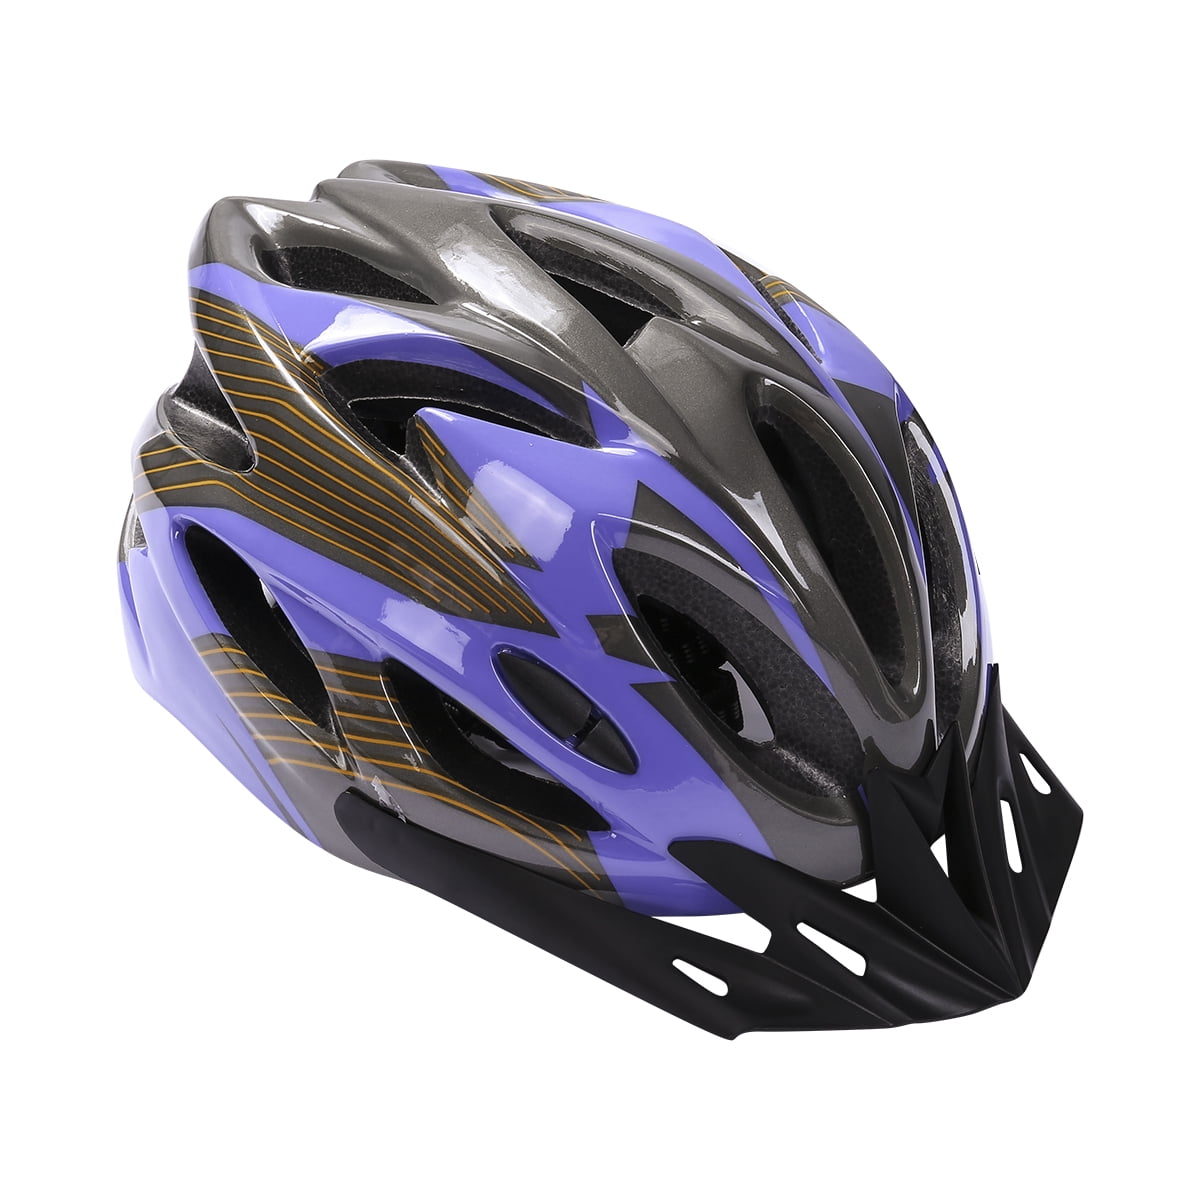 Adult Bicycle Bike Safety Helmet Adjustable Protective Cycling Shockproof Useful 